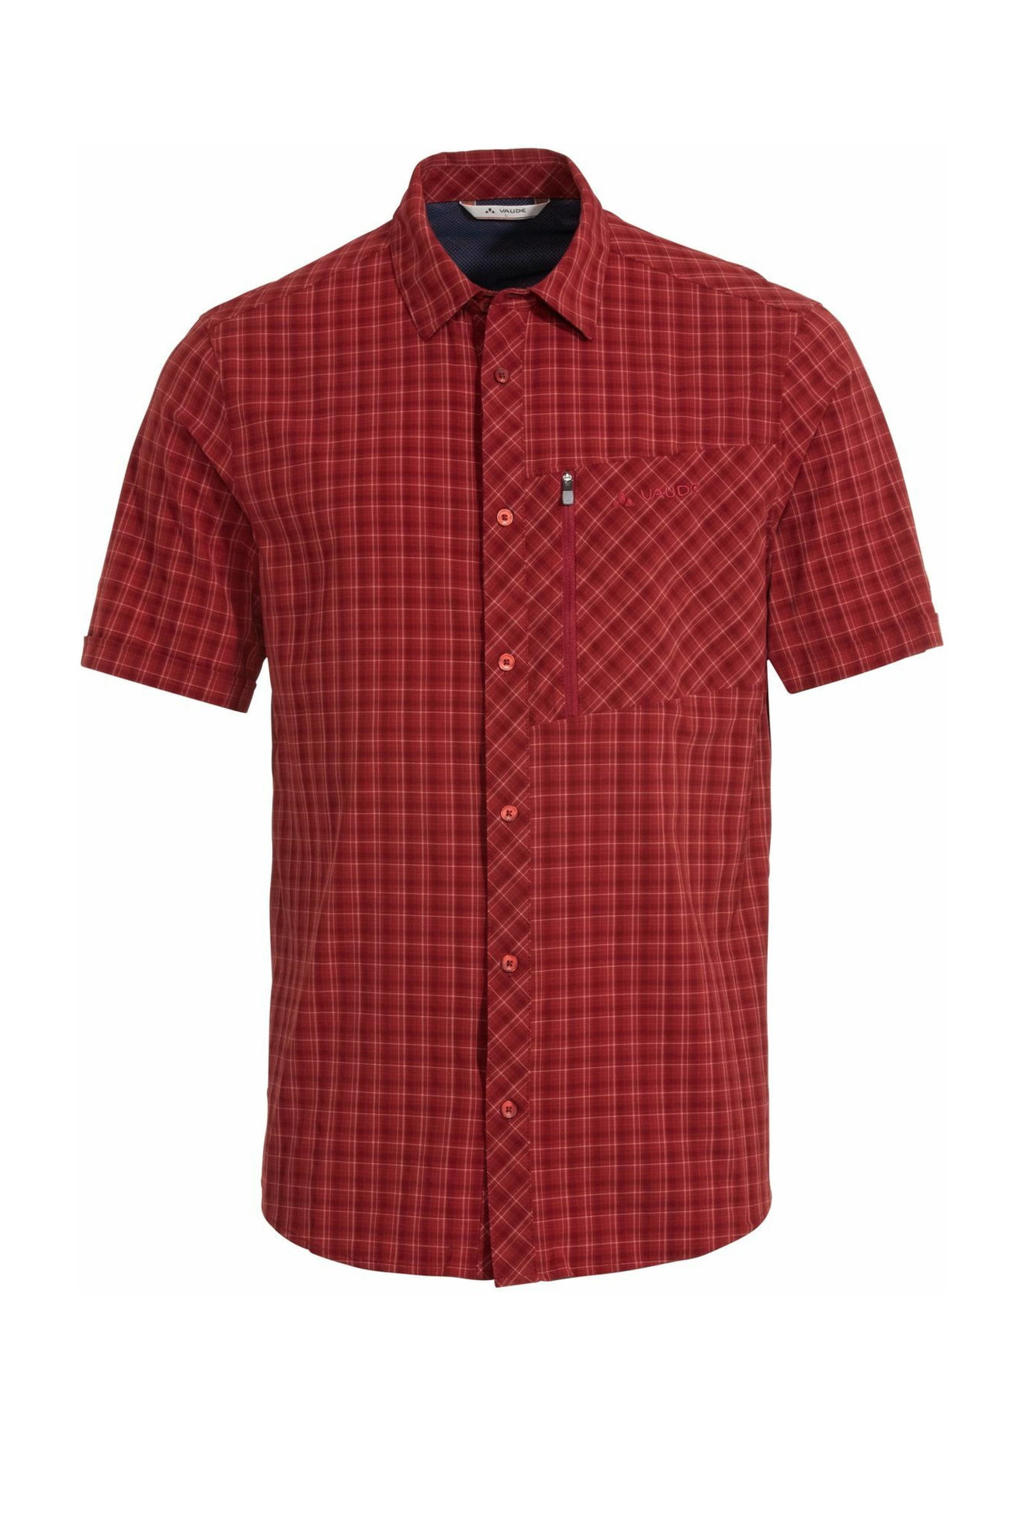 VAUDE outdoor overhemd Seiland II rood